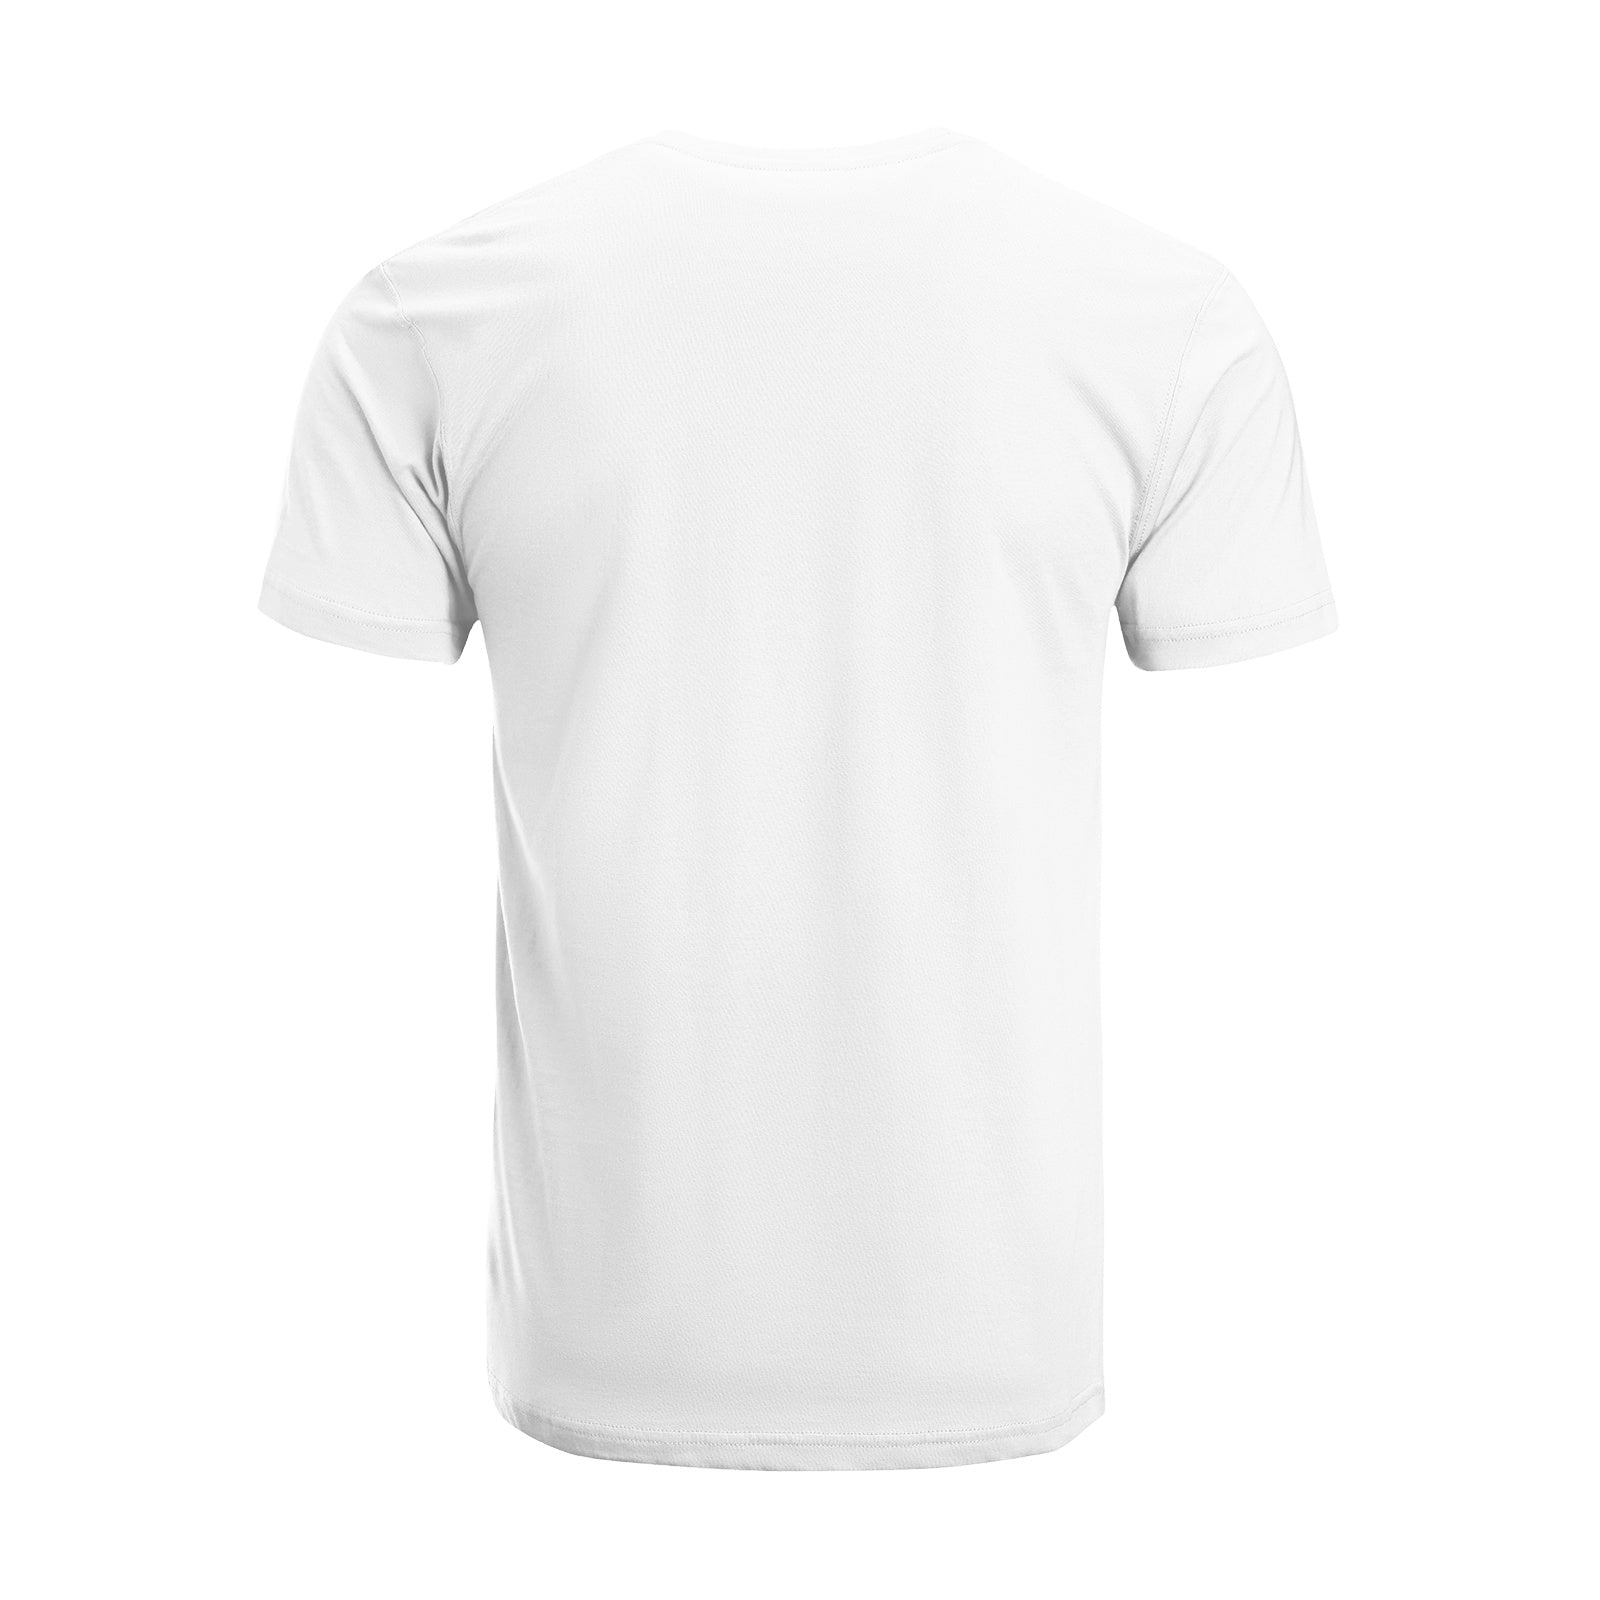 Unisex Short Sleeve Crew Neck Cotton Jersey T-Shirt CAT 07 - Tara-Outfits.com